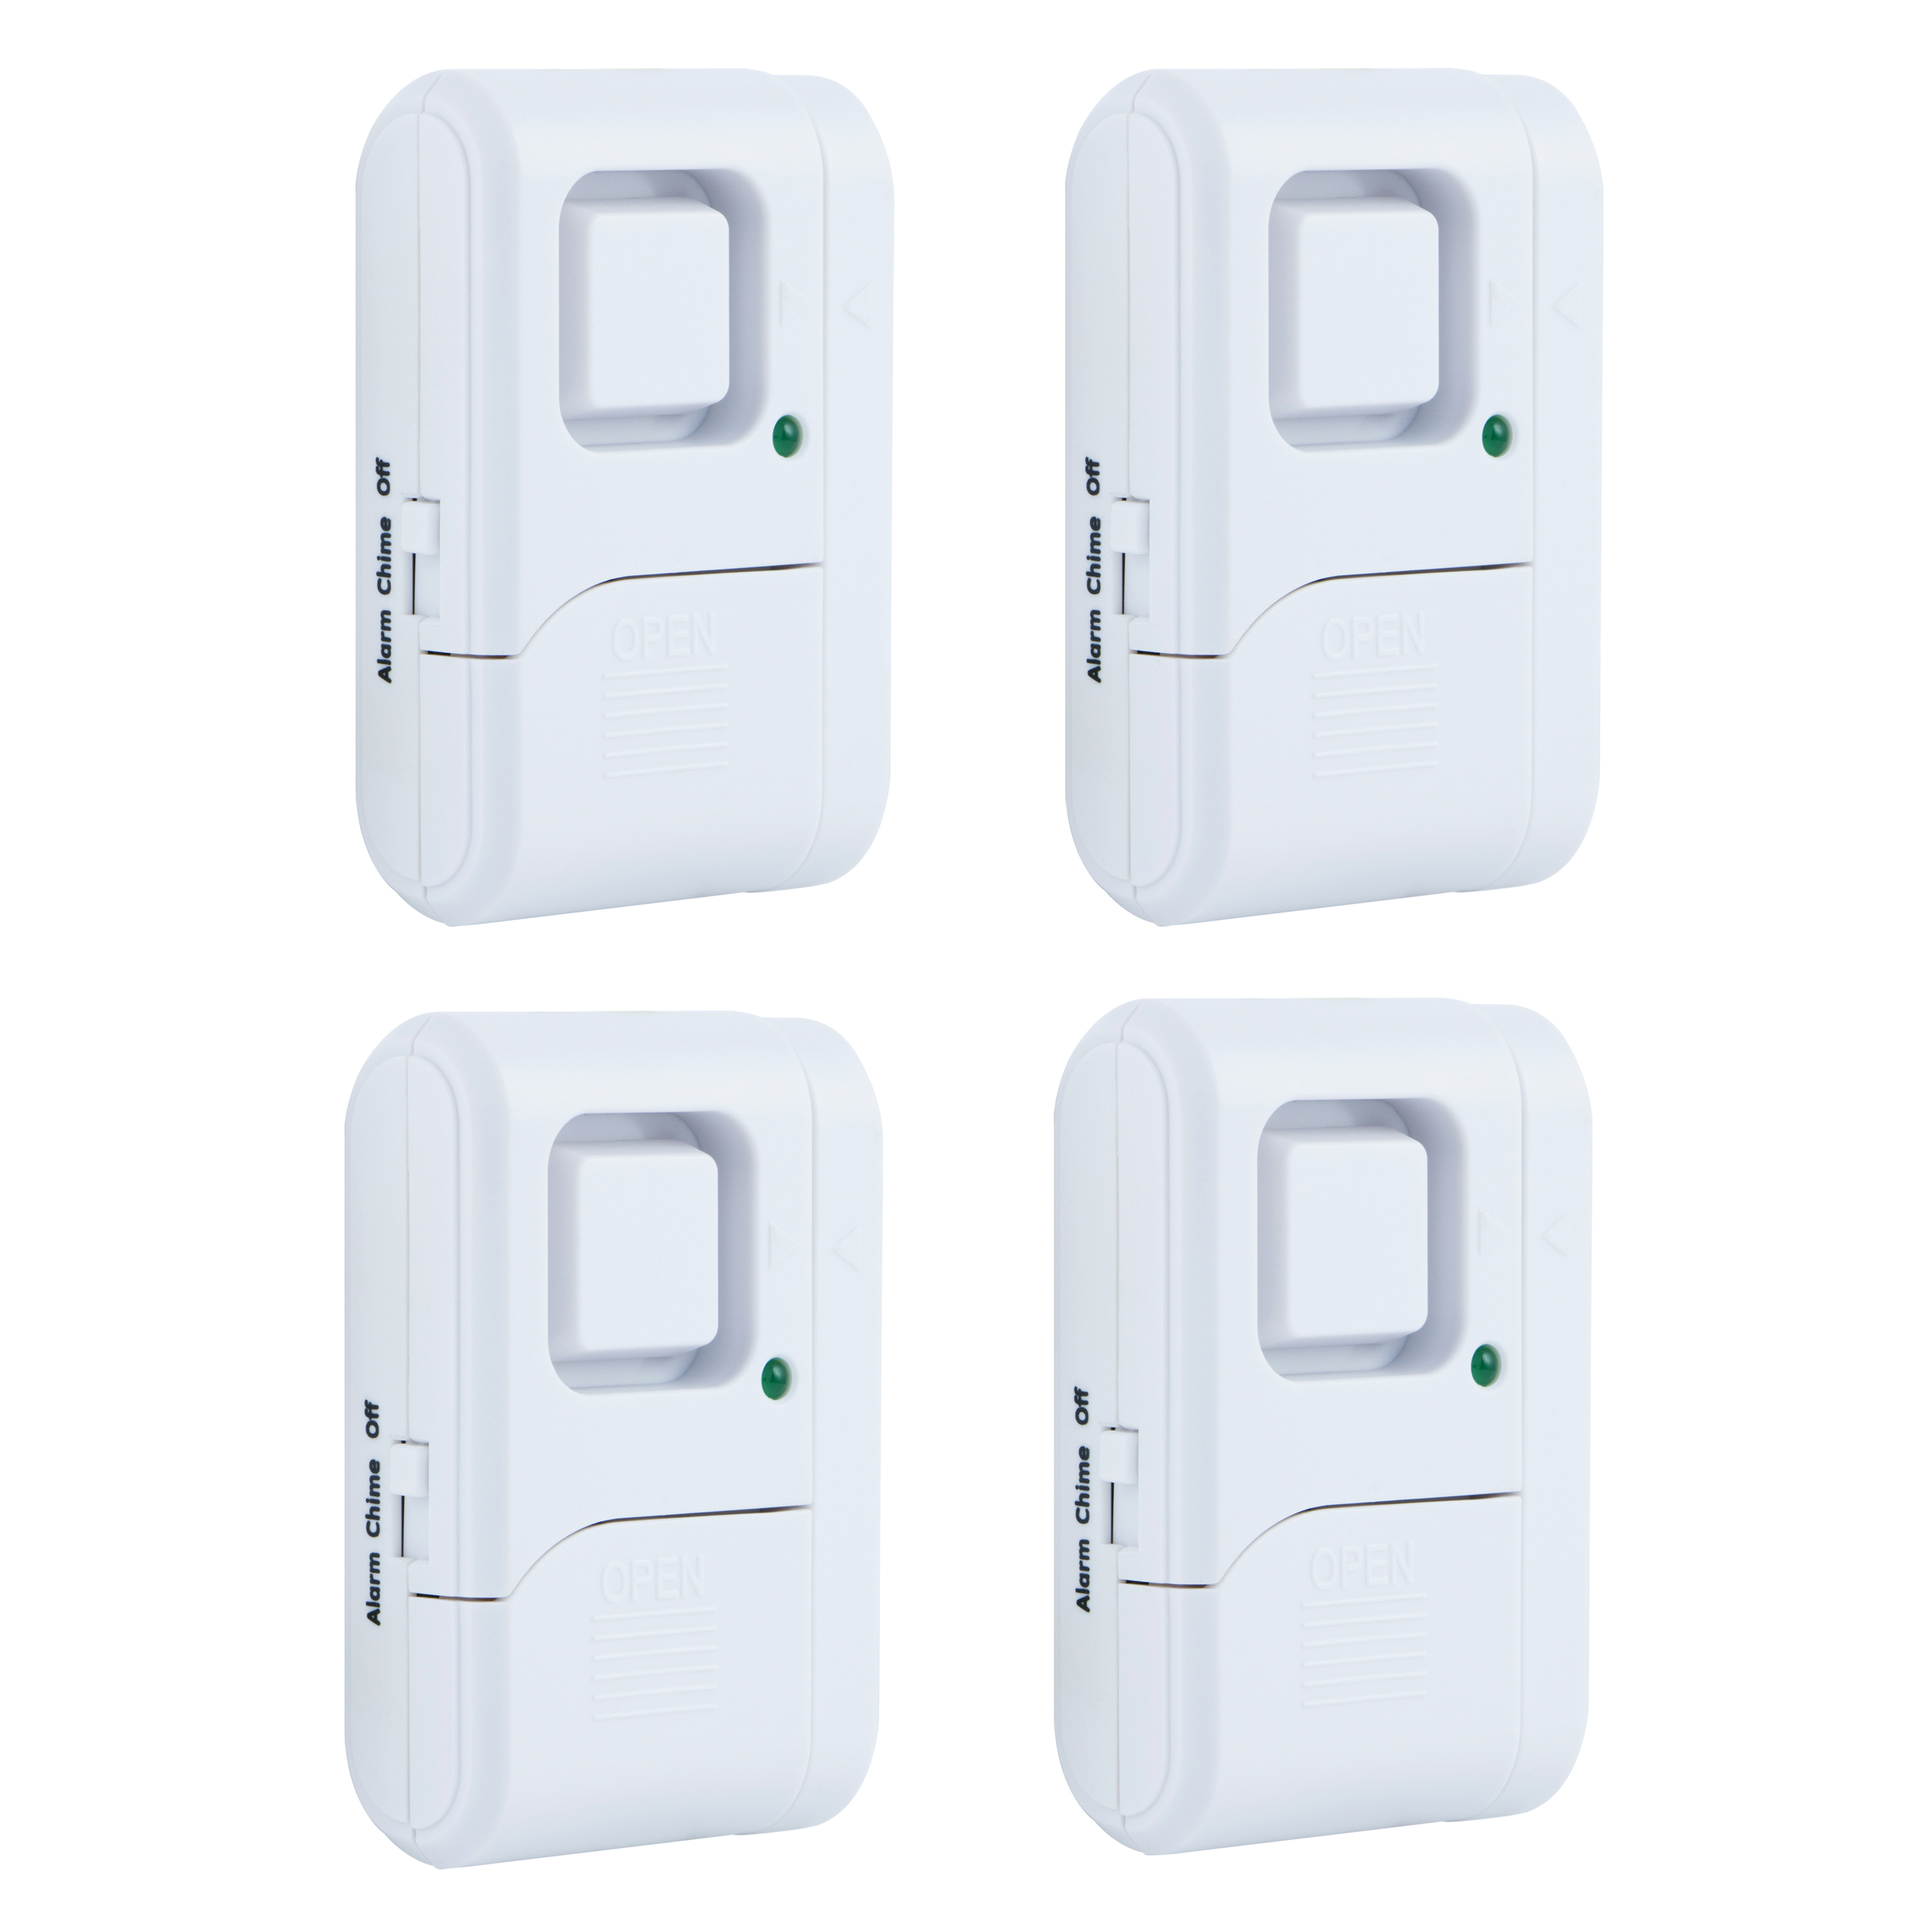 GE Personal Security Window/Door Alarm, 4-Pack, Battery Operated, 45174 - image 1 of 7